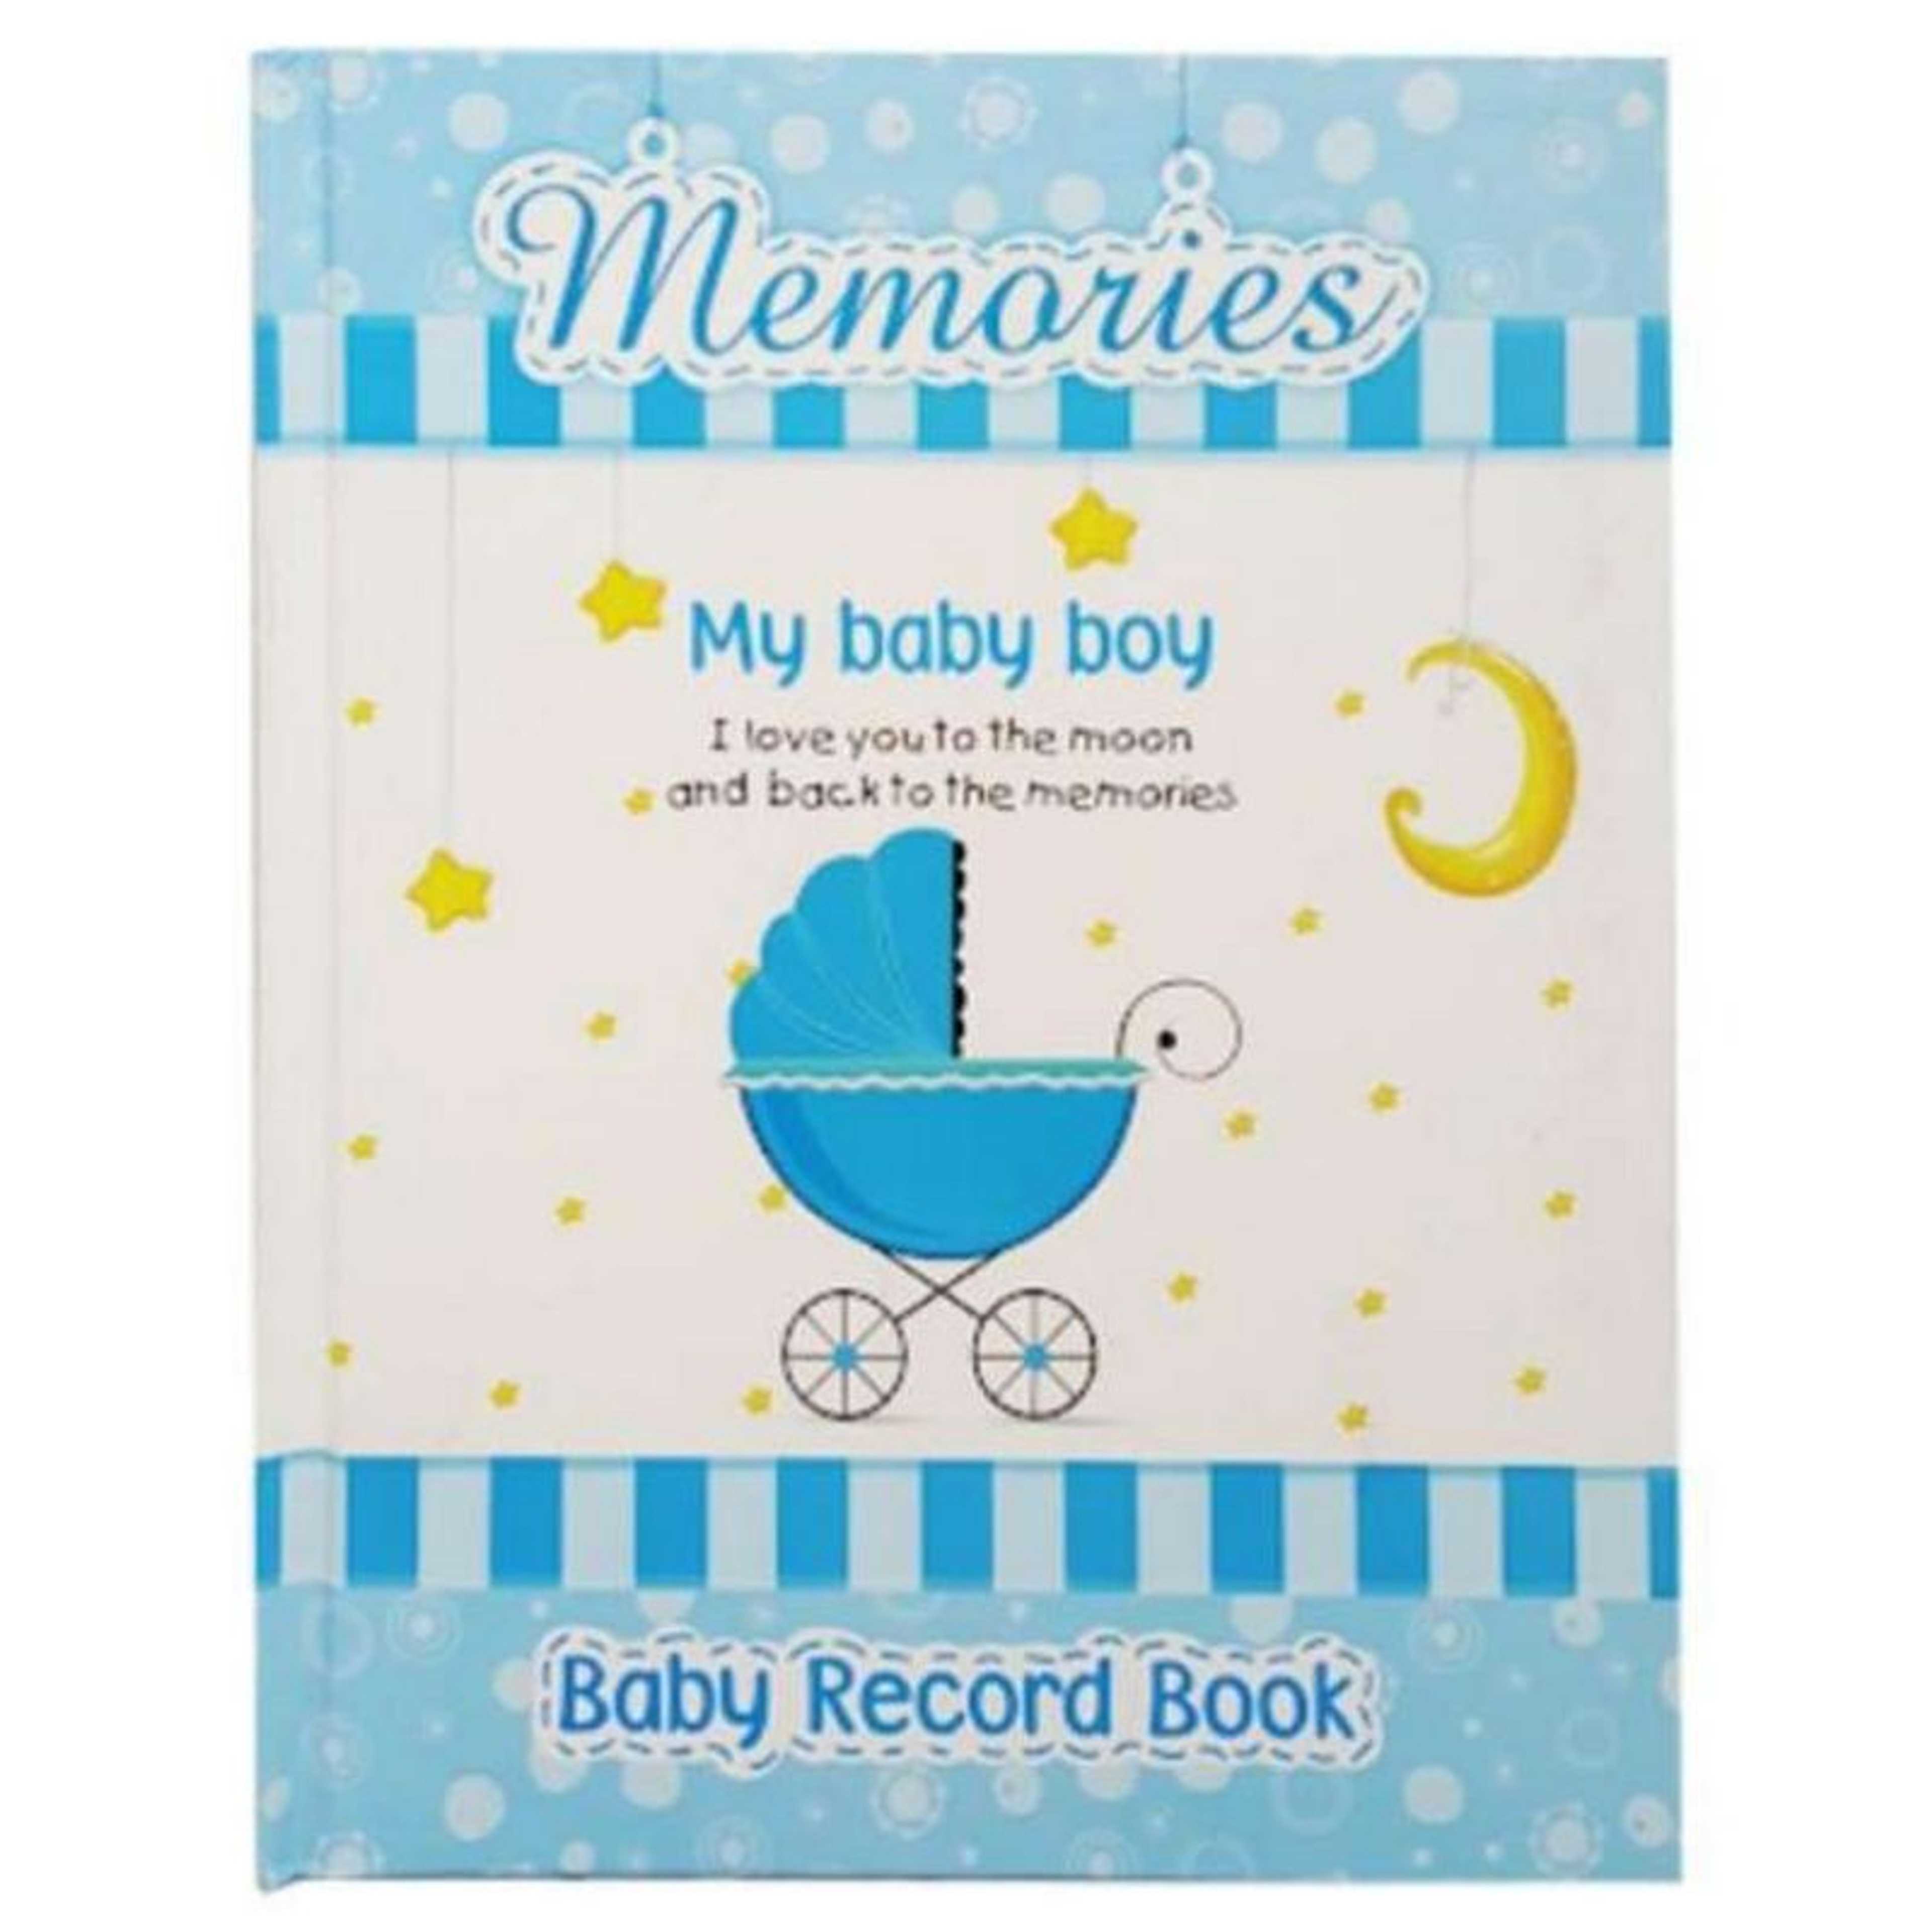 Memories Babies Record Book - My Baby Boy (Karachi Stationers)